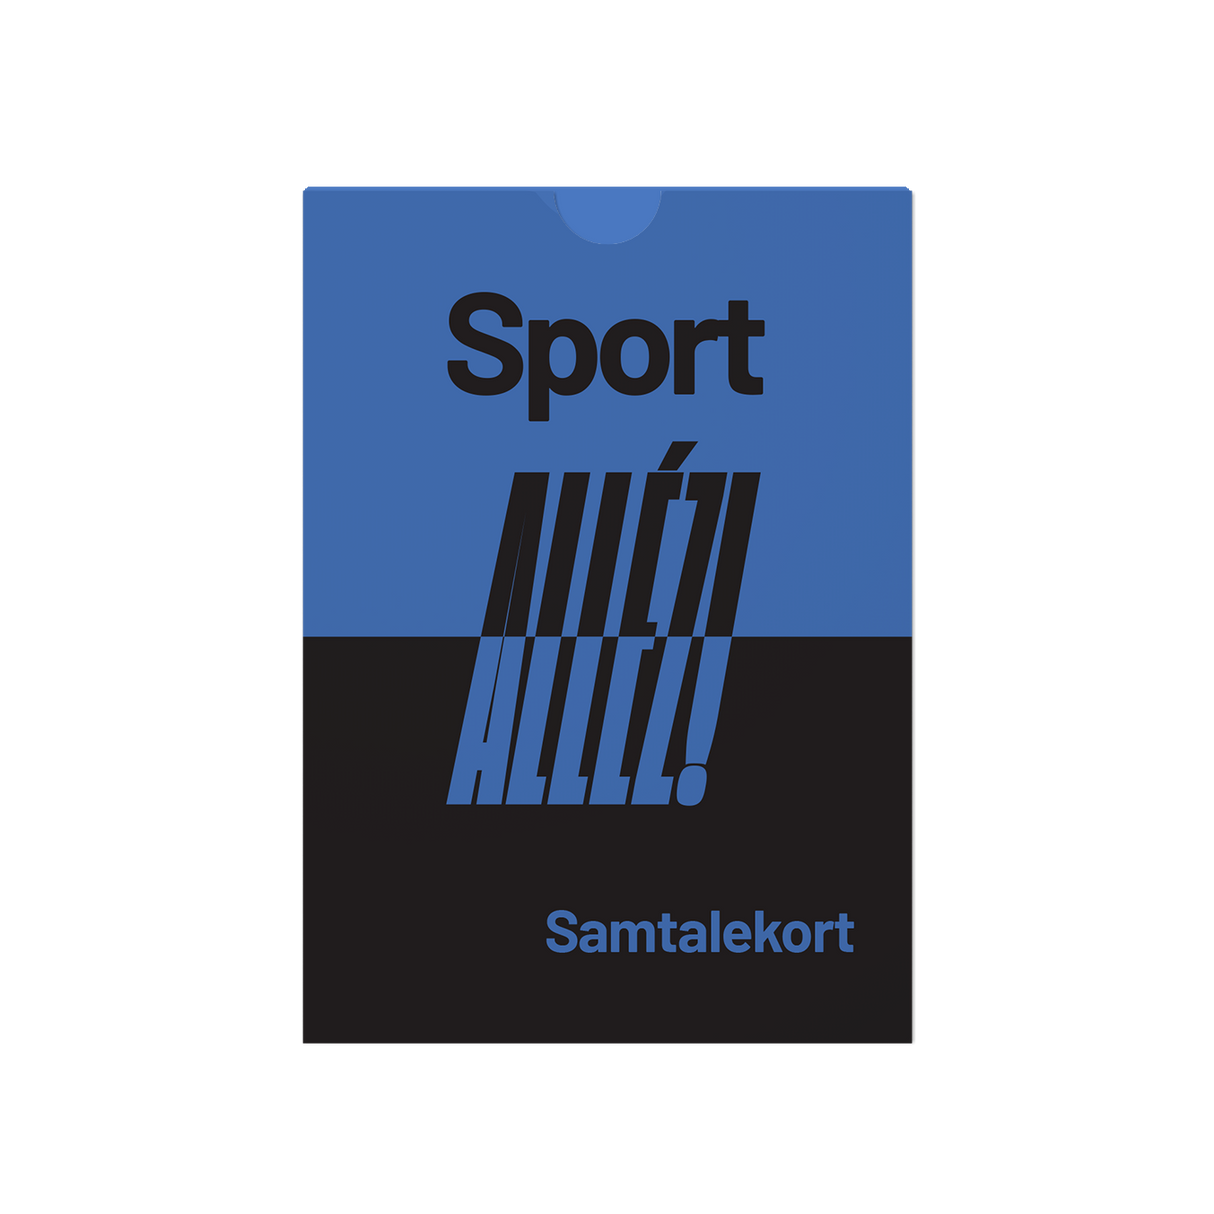 SNAK Sports Konversationskarten/Spiele